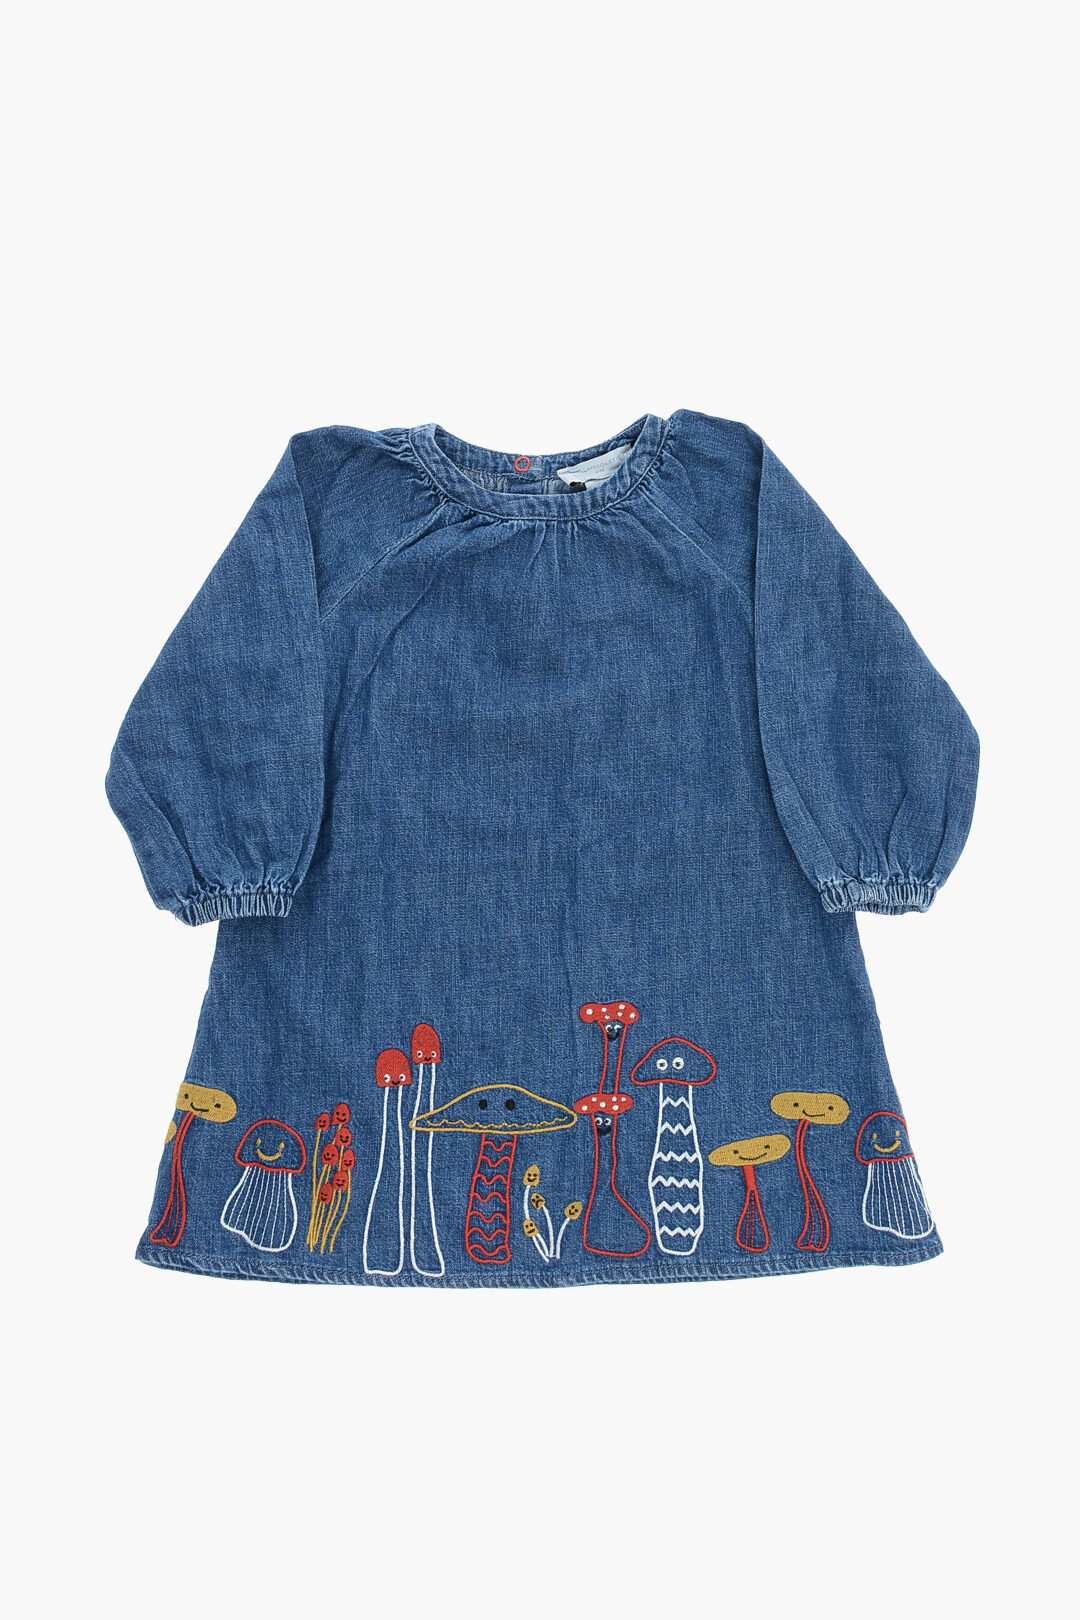 Buy Cool Club toddler girls long sleeve polka dot with belt denim dress  chambray Online | Brands For Less